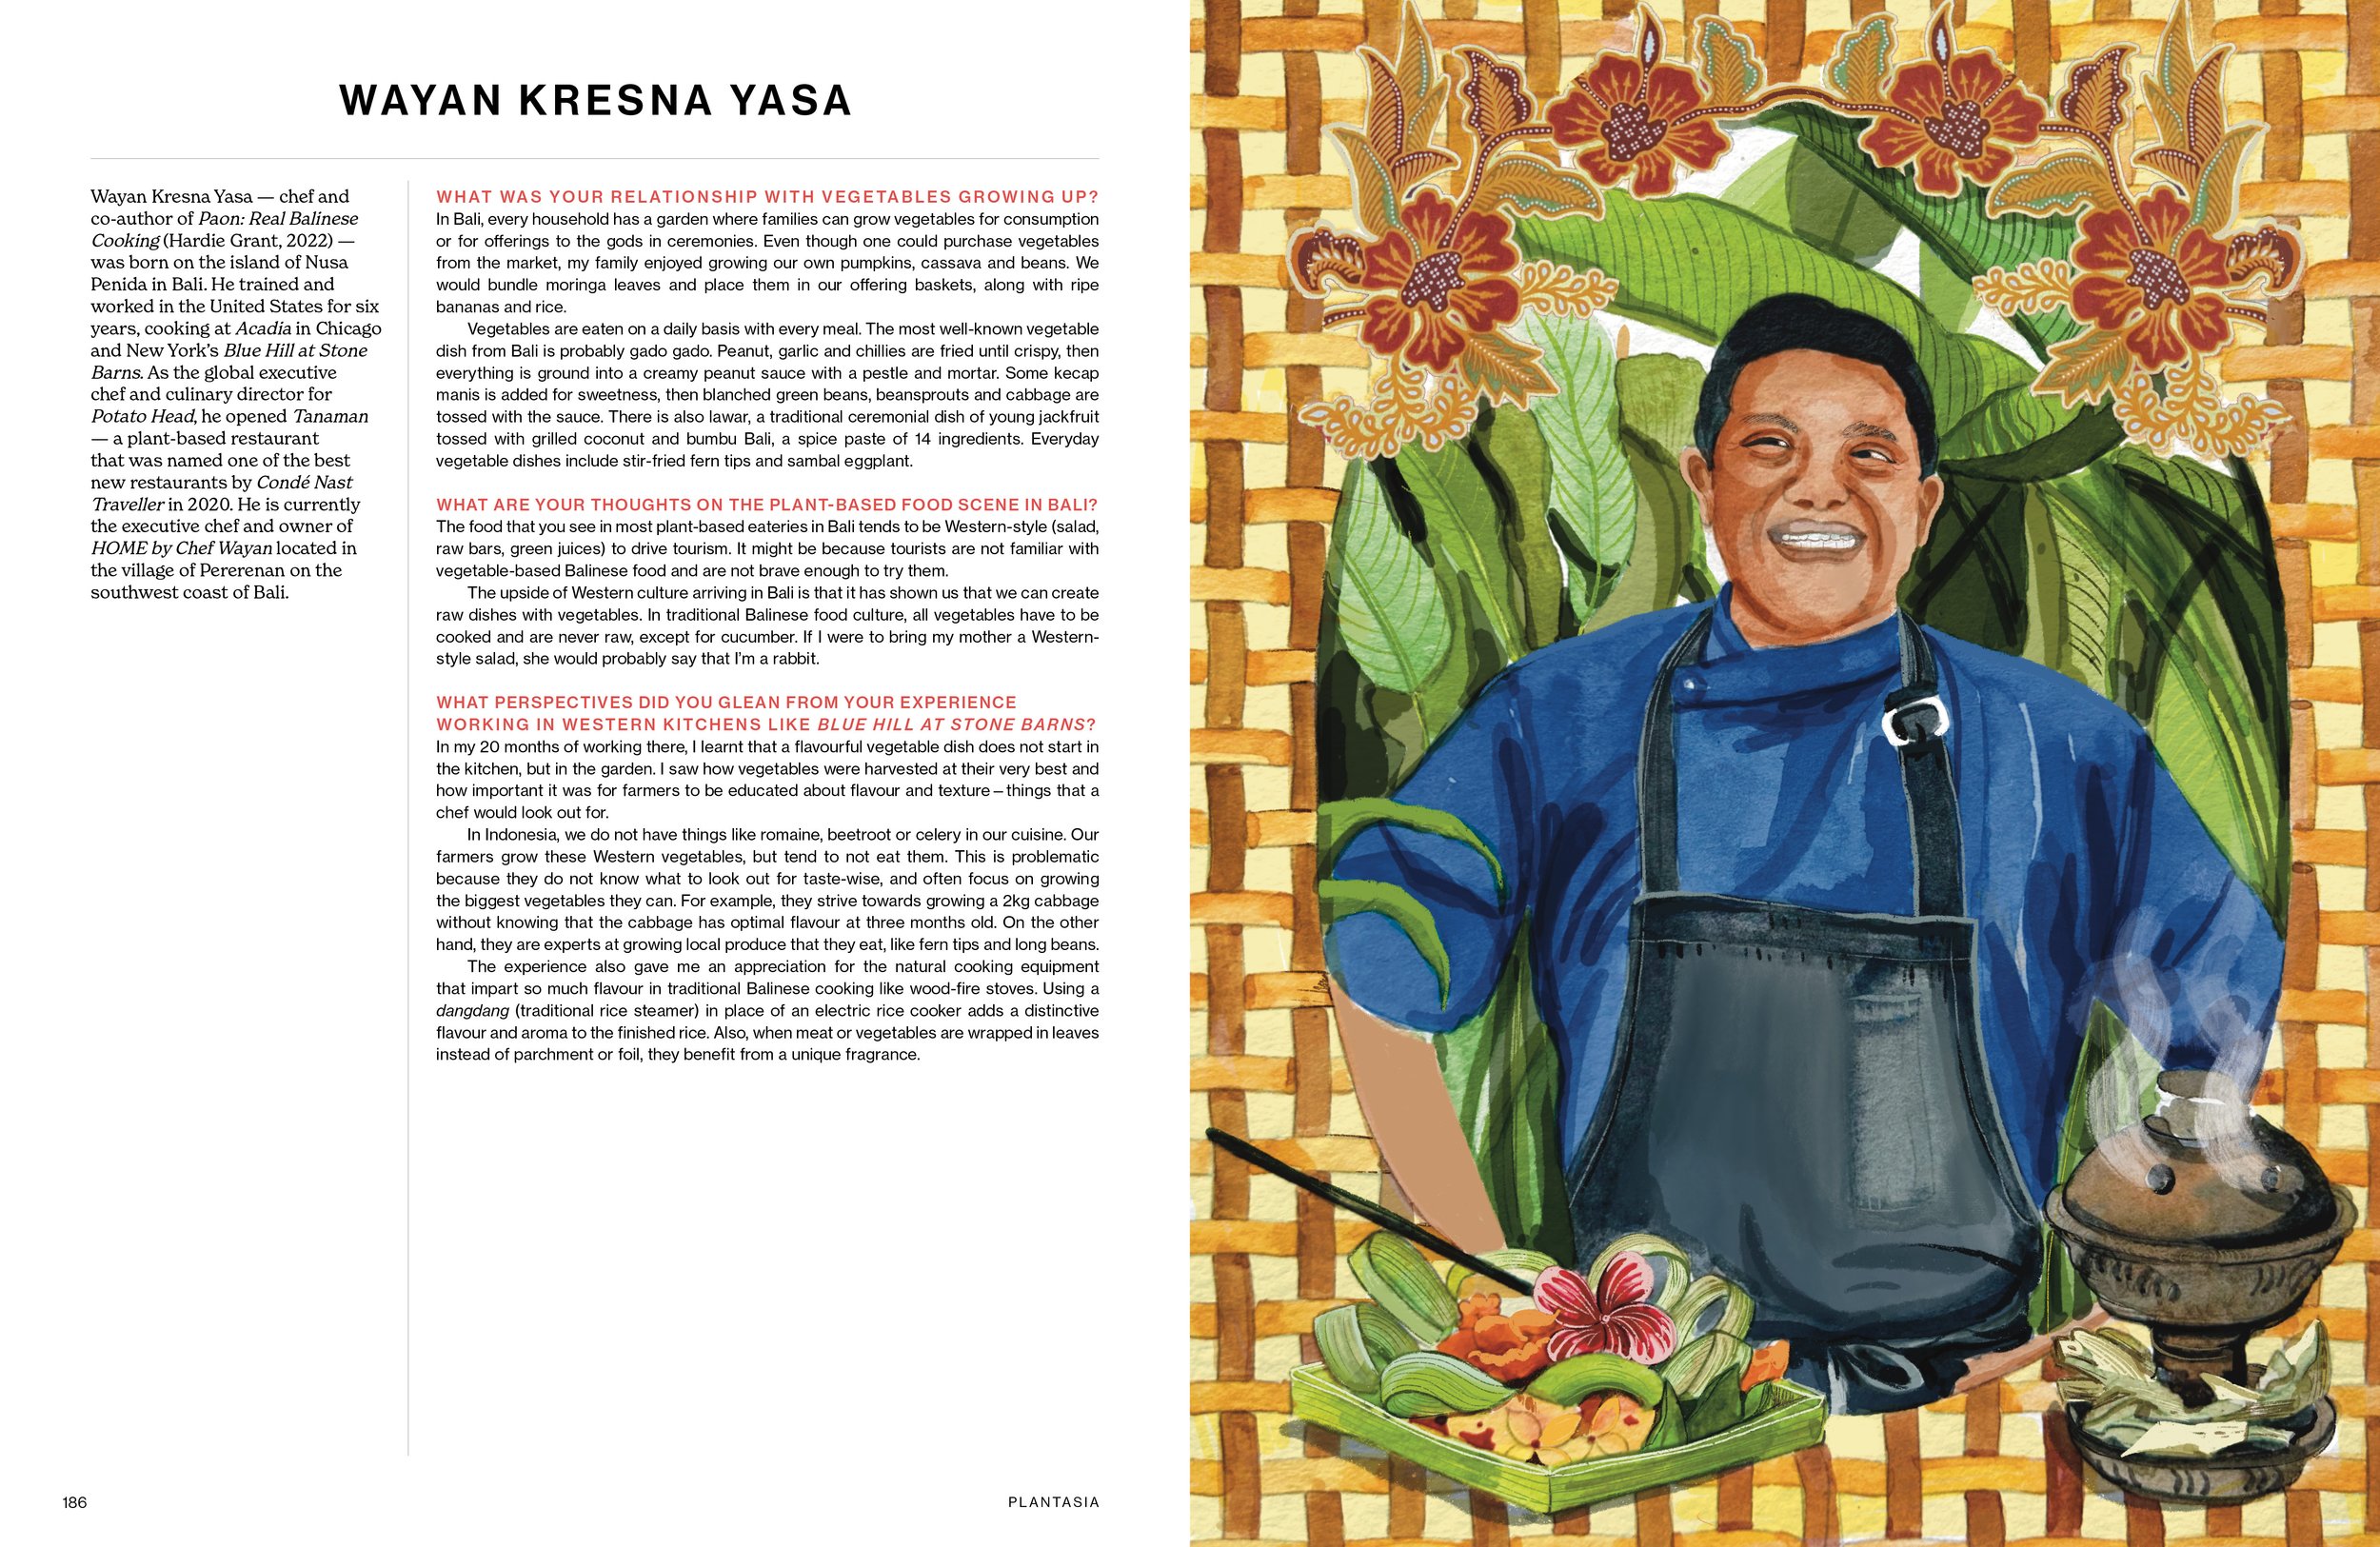 A profile of Wayan Kresna Yasa from Plantasia.